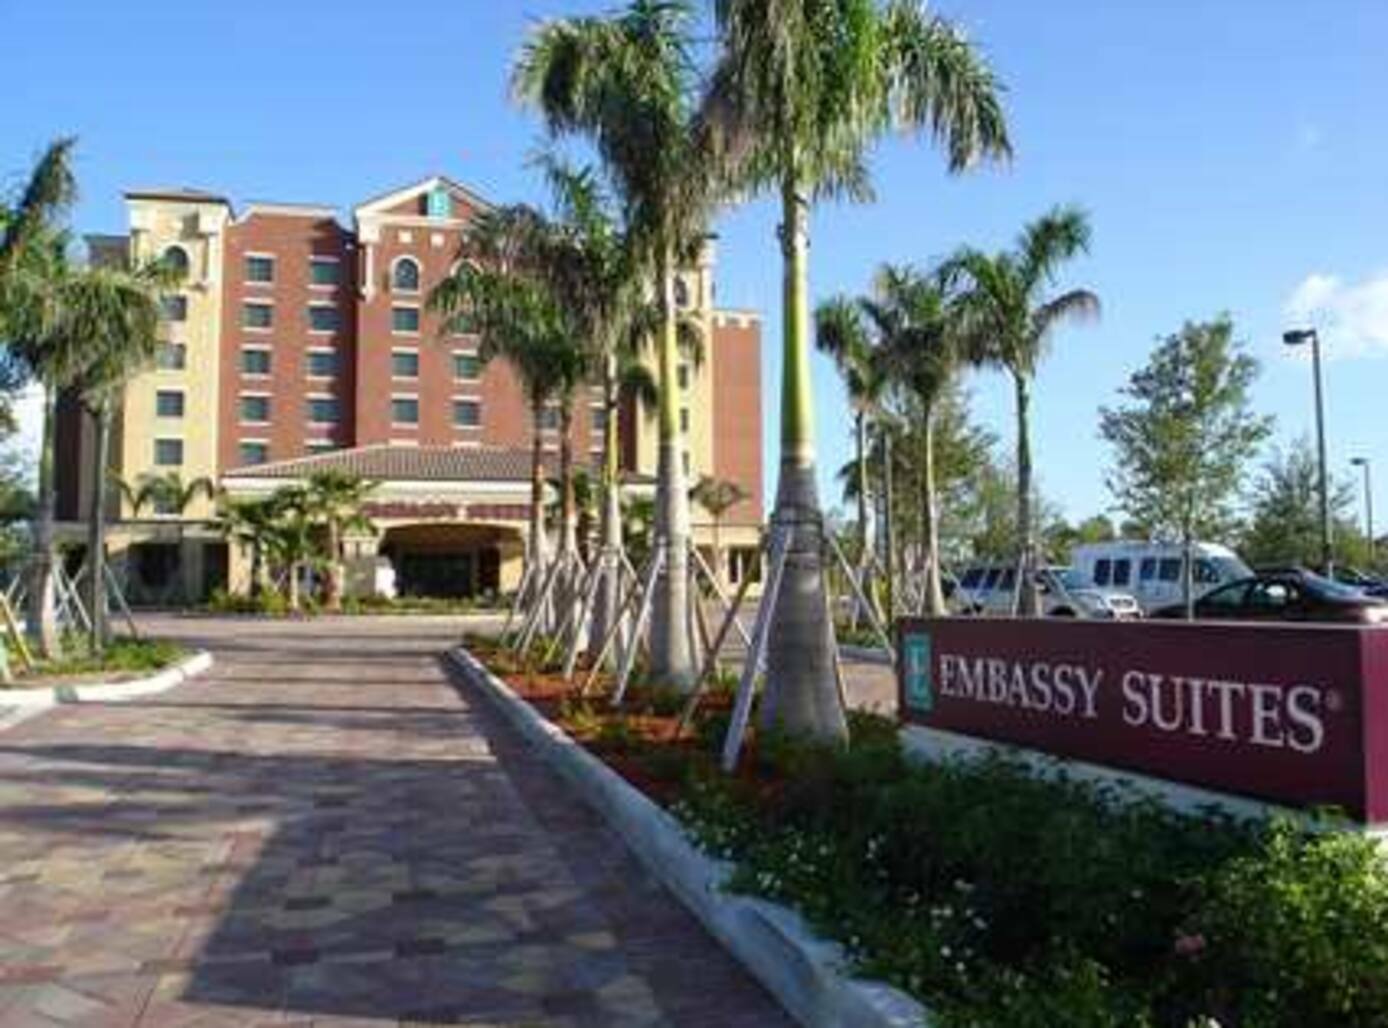 Photo of Embassy Suites by Hilton Fort Myers Estero, Estero, FL